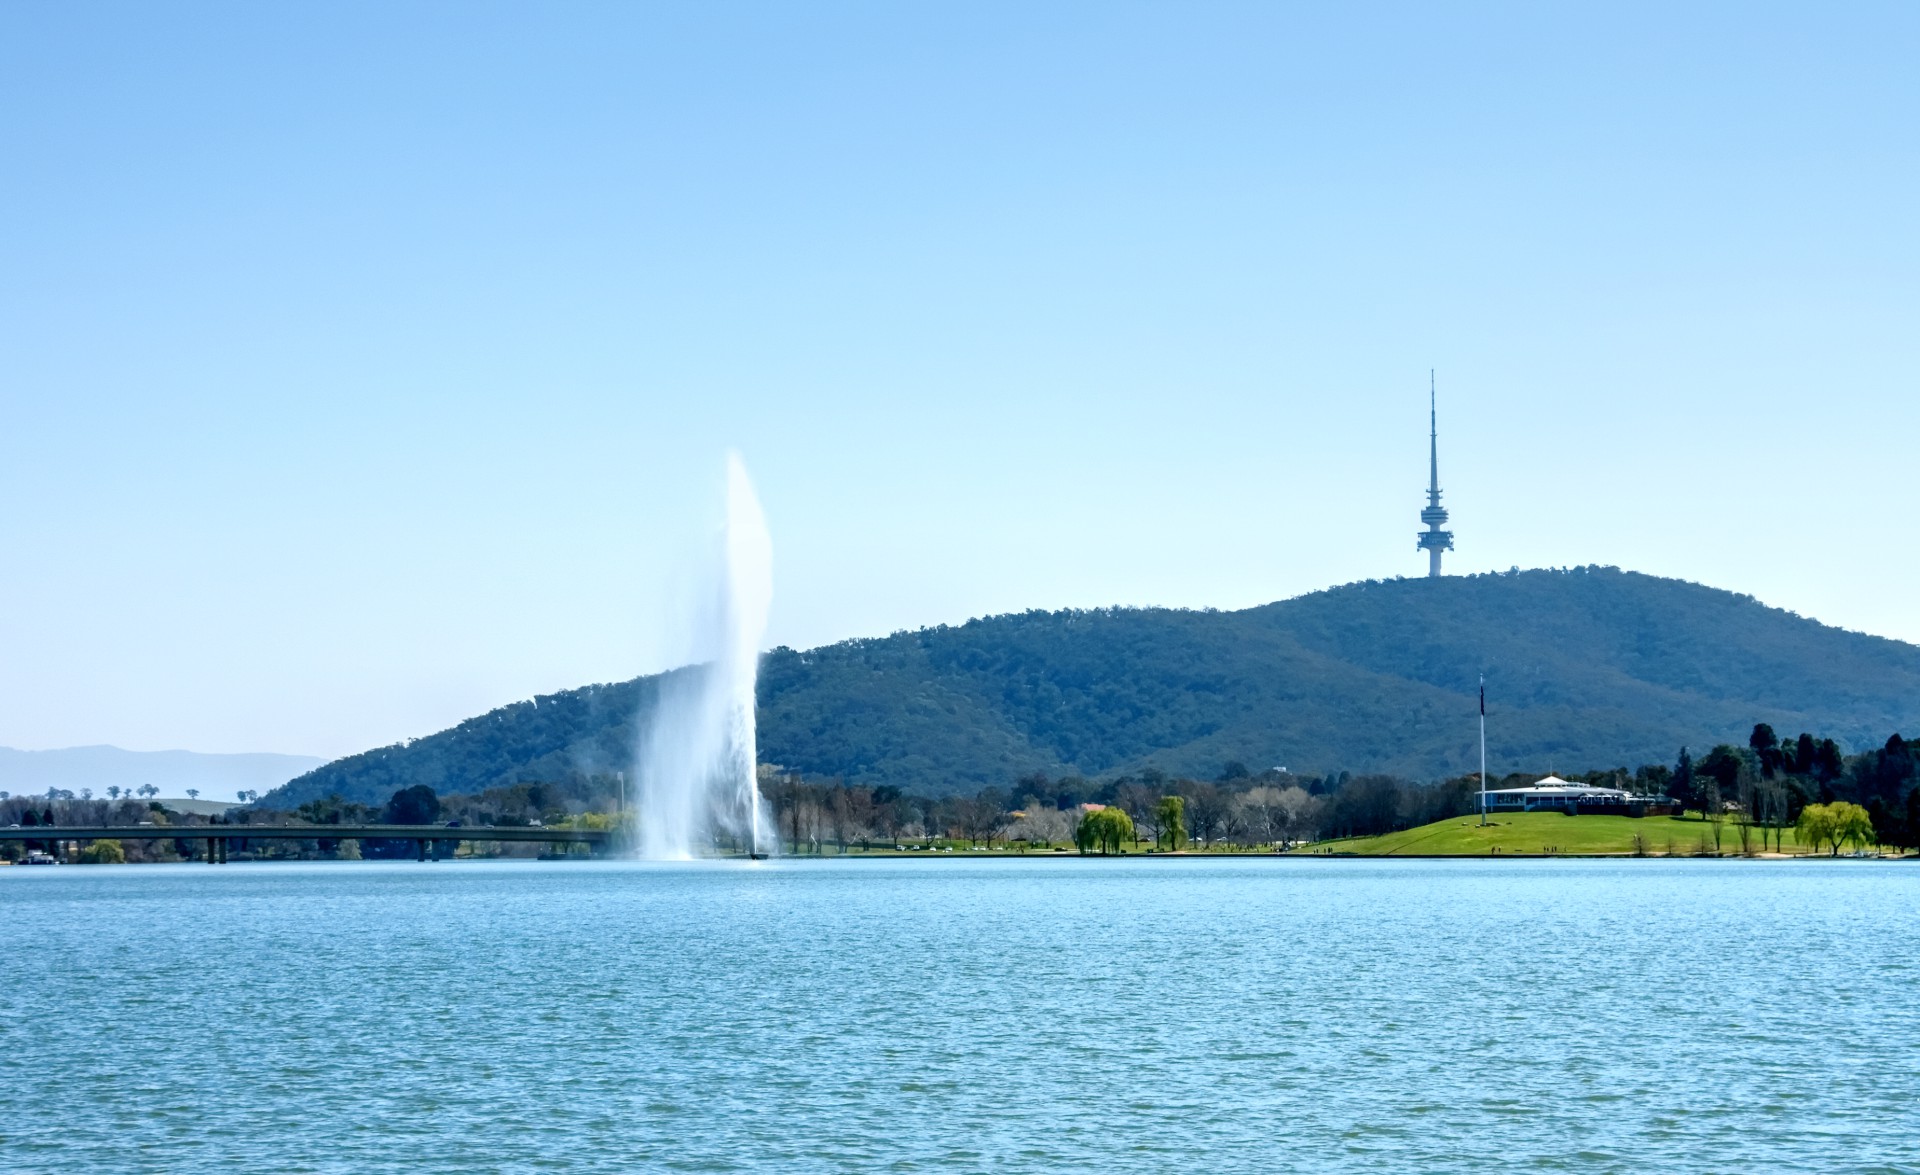 Canberra Image 1